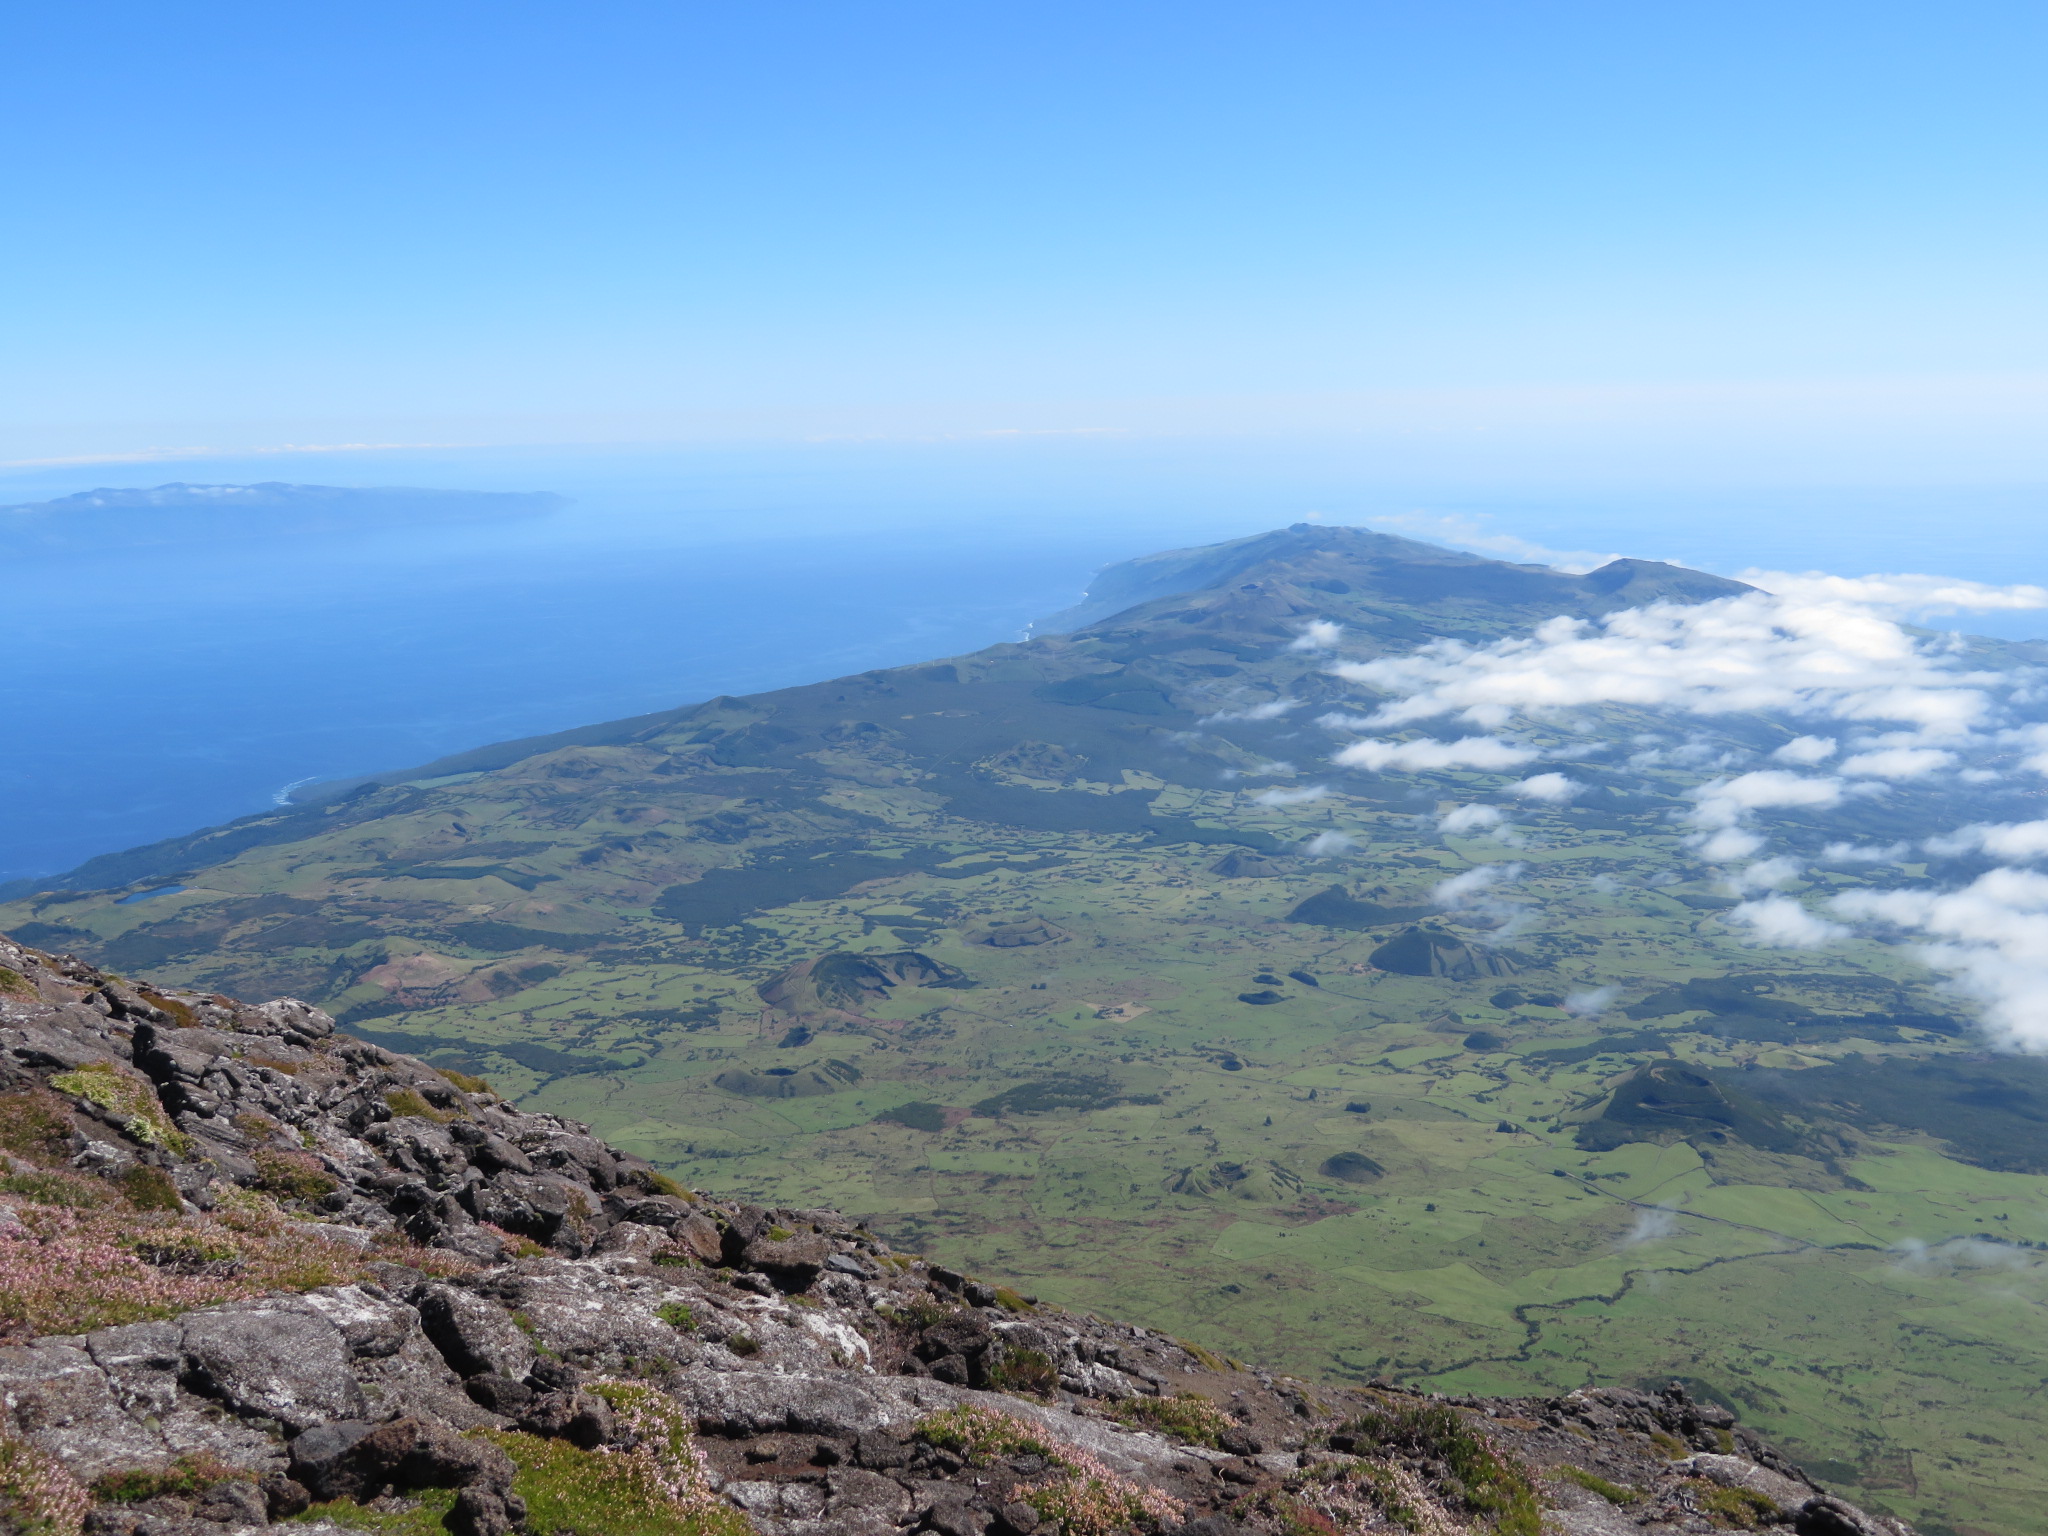 Pico Island: East along Pico island from Volcano crater rim - © William Mackesy